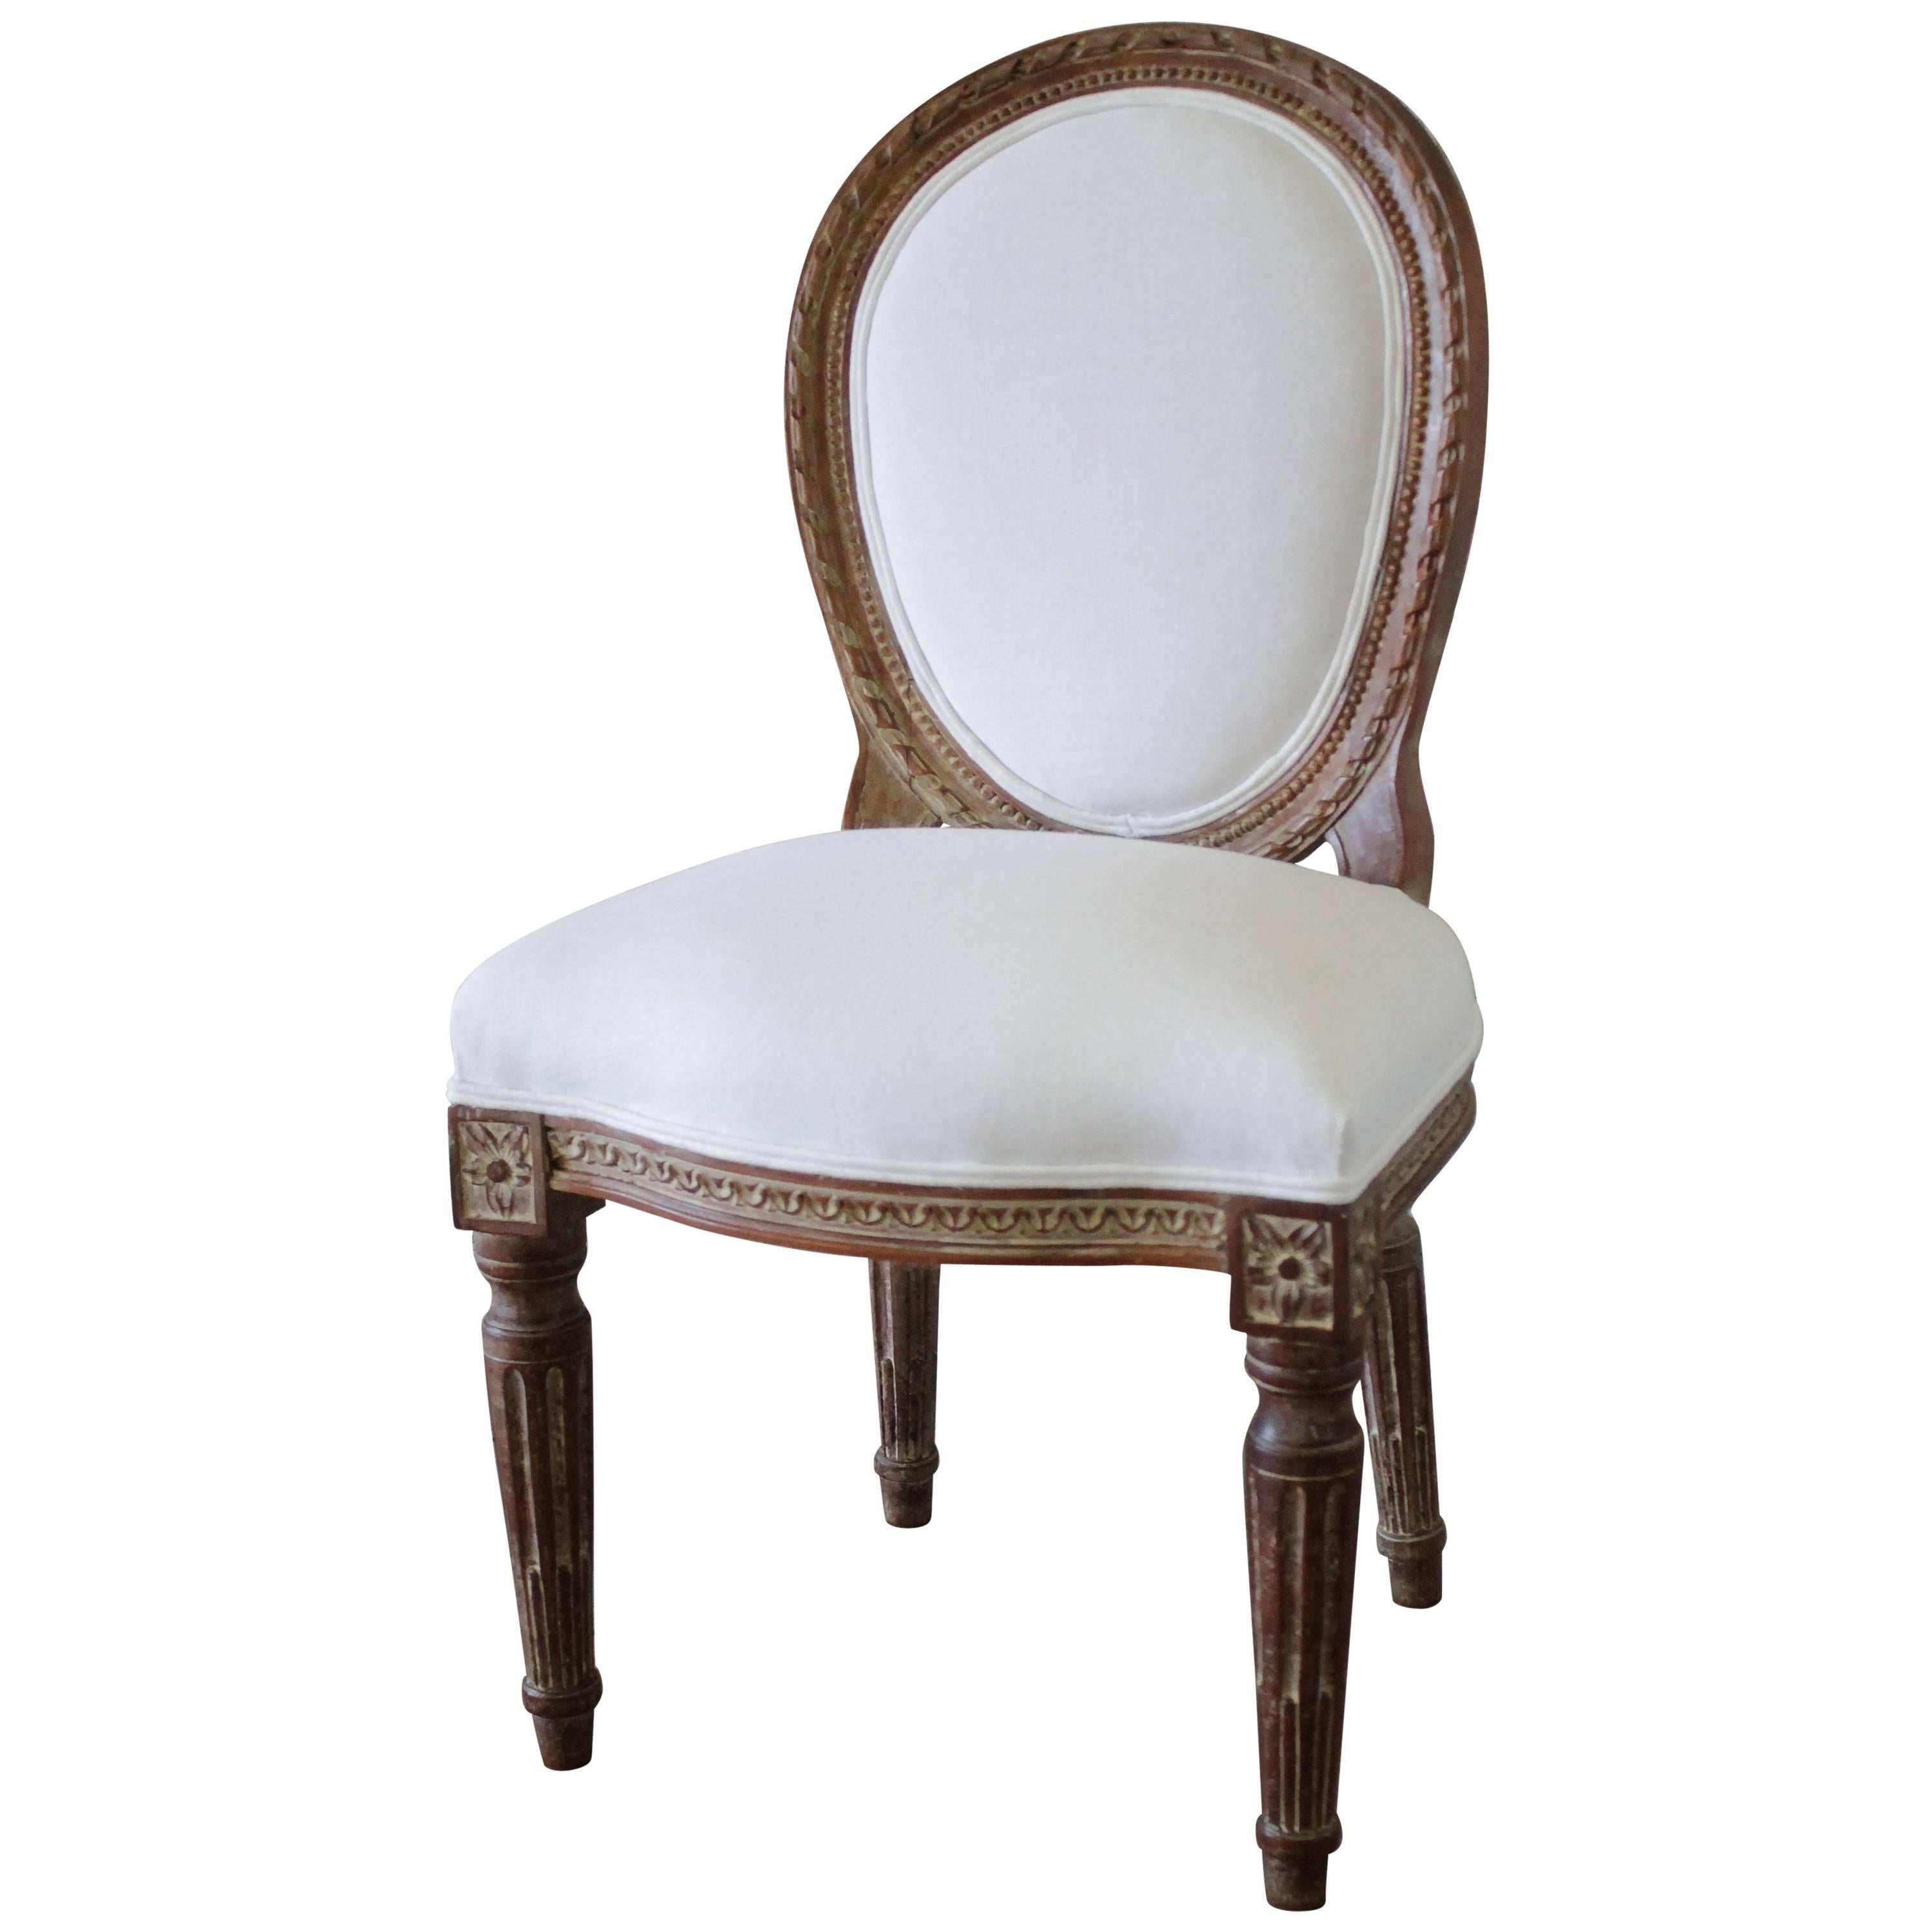 19th Century Antique Louis XVI Style Vanity Chair Upholstered in Belgian Linen